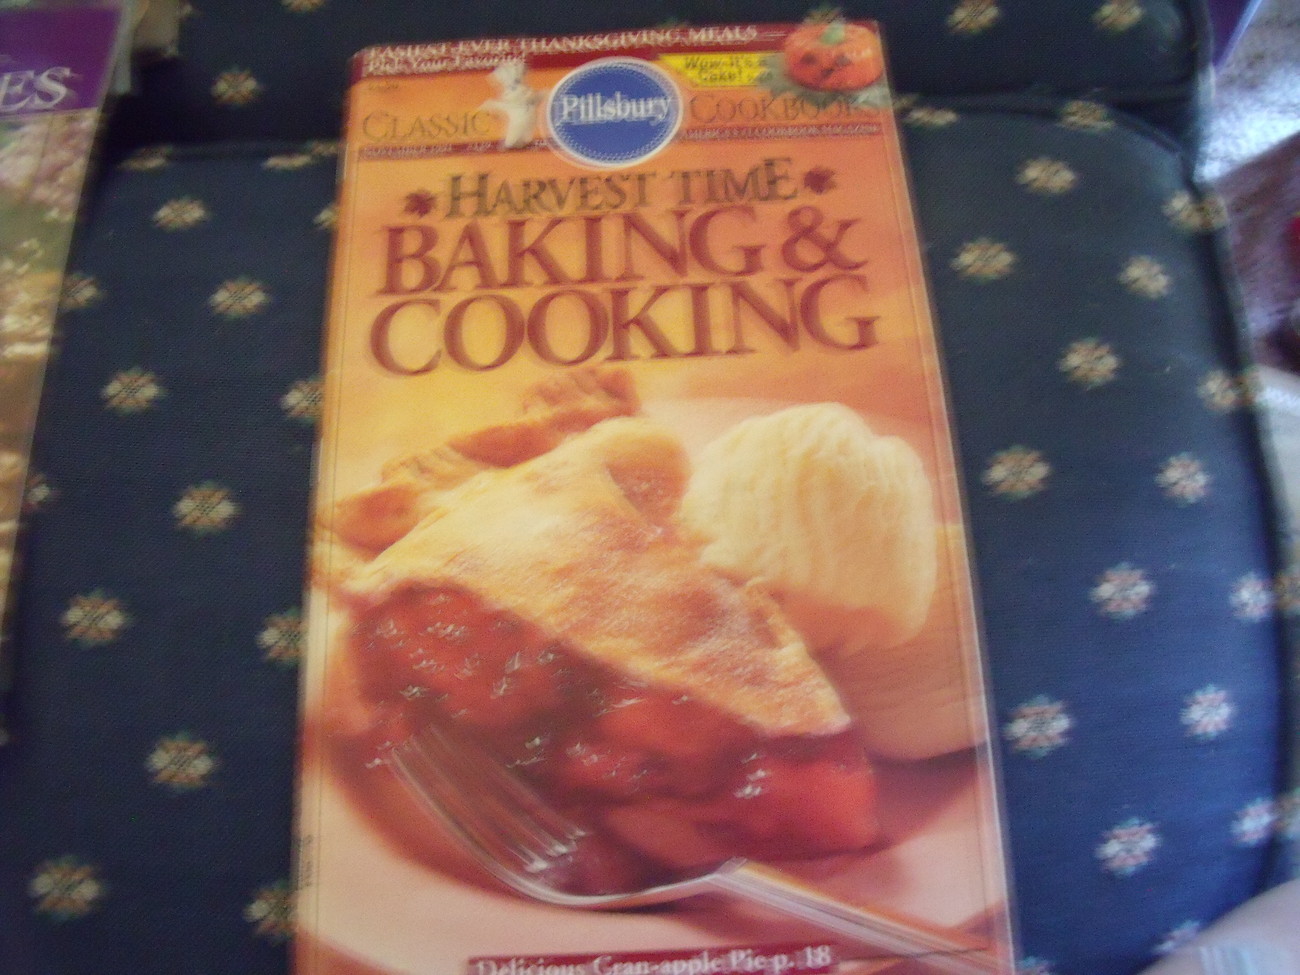 Pillsbury Classic "Harvest Time Baking & Cooking" Cookbook circa 1991 - $6.00